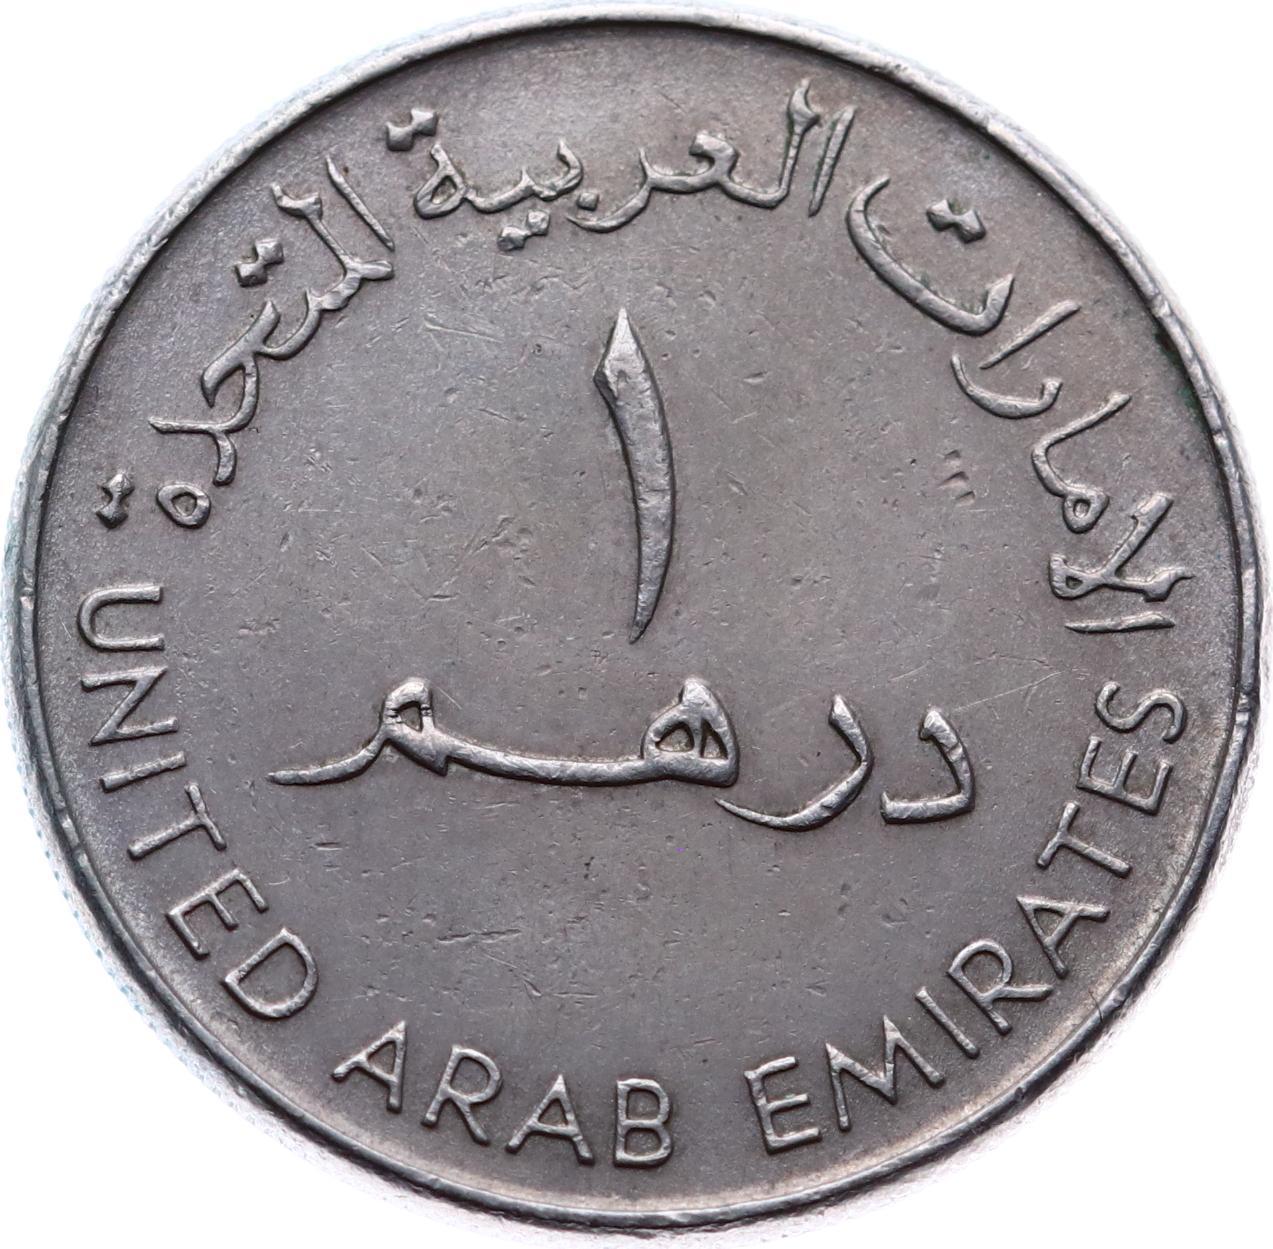 320 дирхам. Монета United arab Emirates 2007 1428. Arab Emirates монета. United arab Emirates монета 1. Монета United arab Emirates 1993-1998.